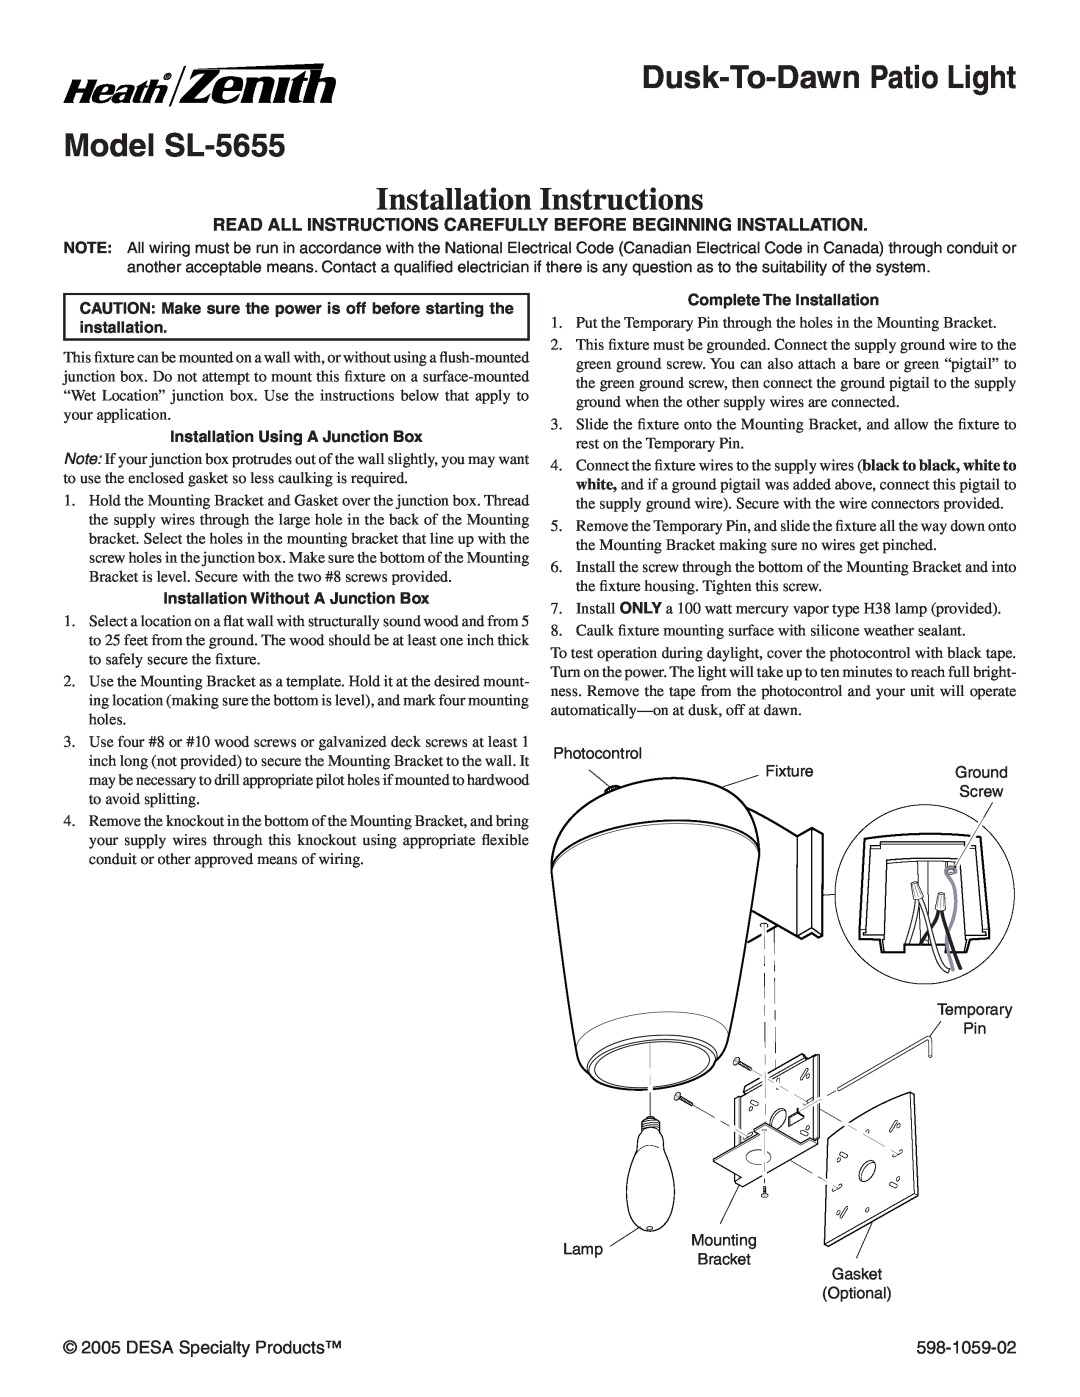 Heath Zenith installation instructions Installation Instructions, Dusk-To-Dawn Patio Light Model SL-5655 